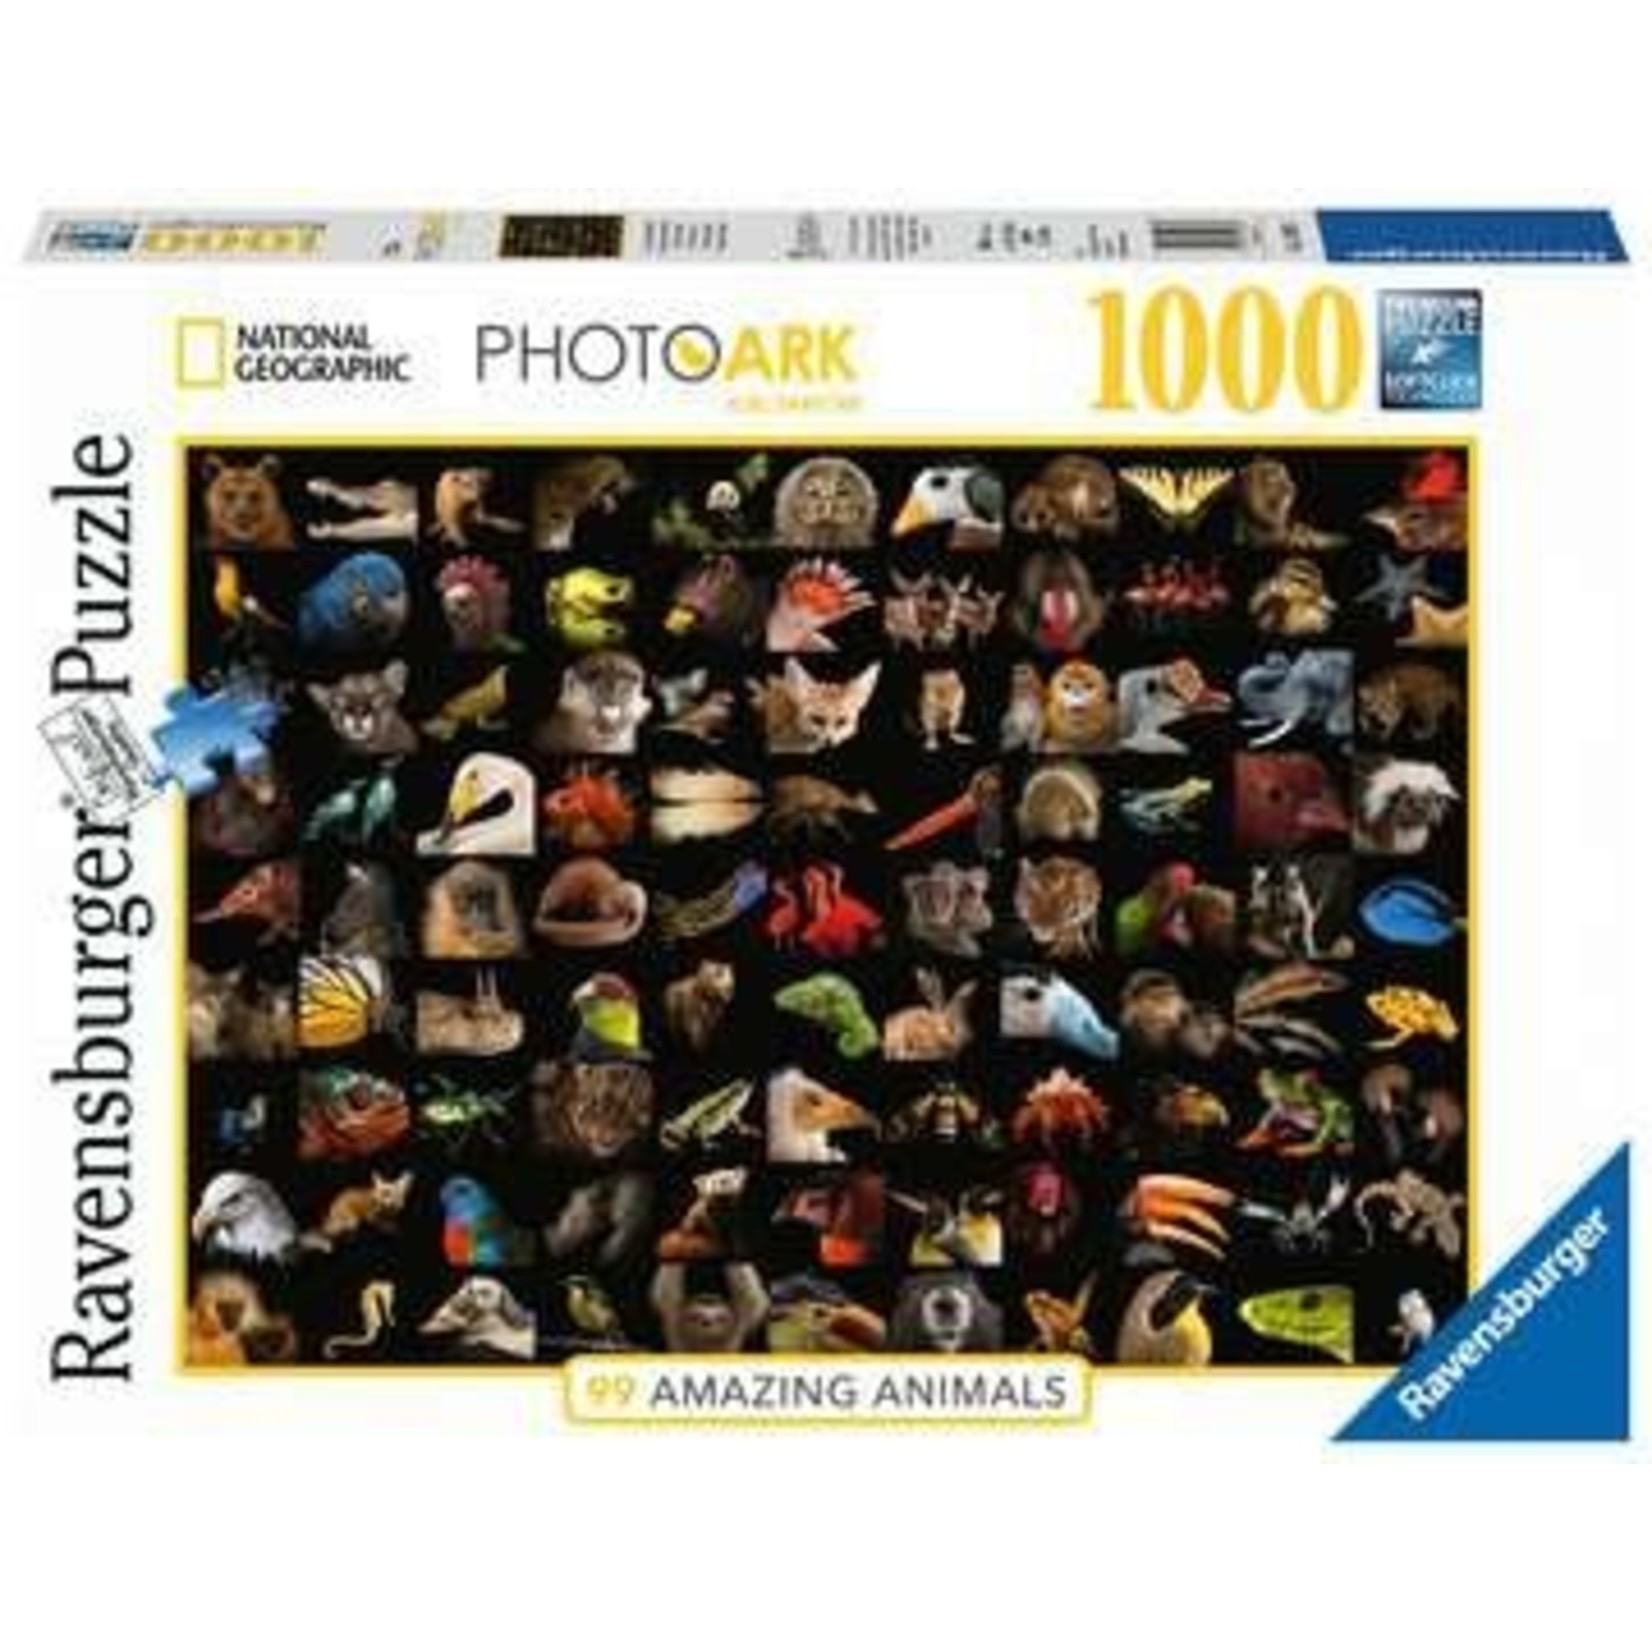 99 Stunning Animals 1000 Piece Puzzle